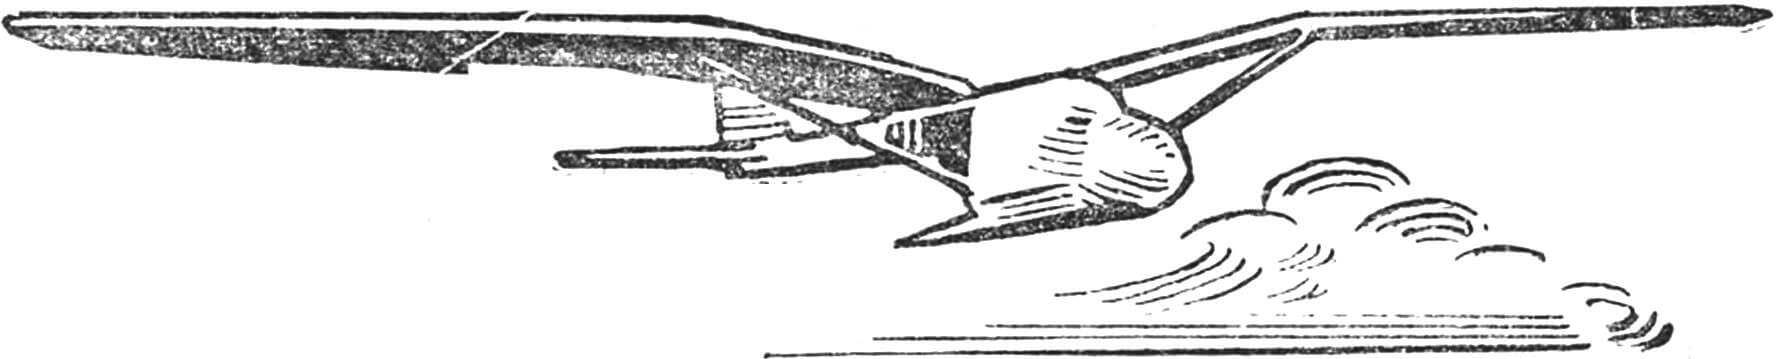 Рис. 5. Планер-орнитоптер американца Моола.